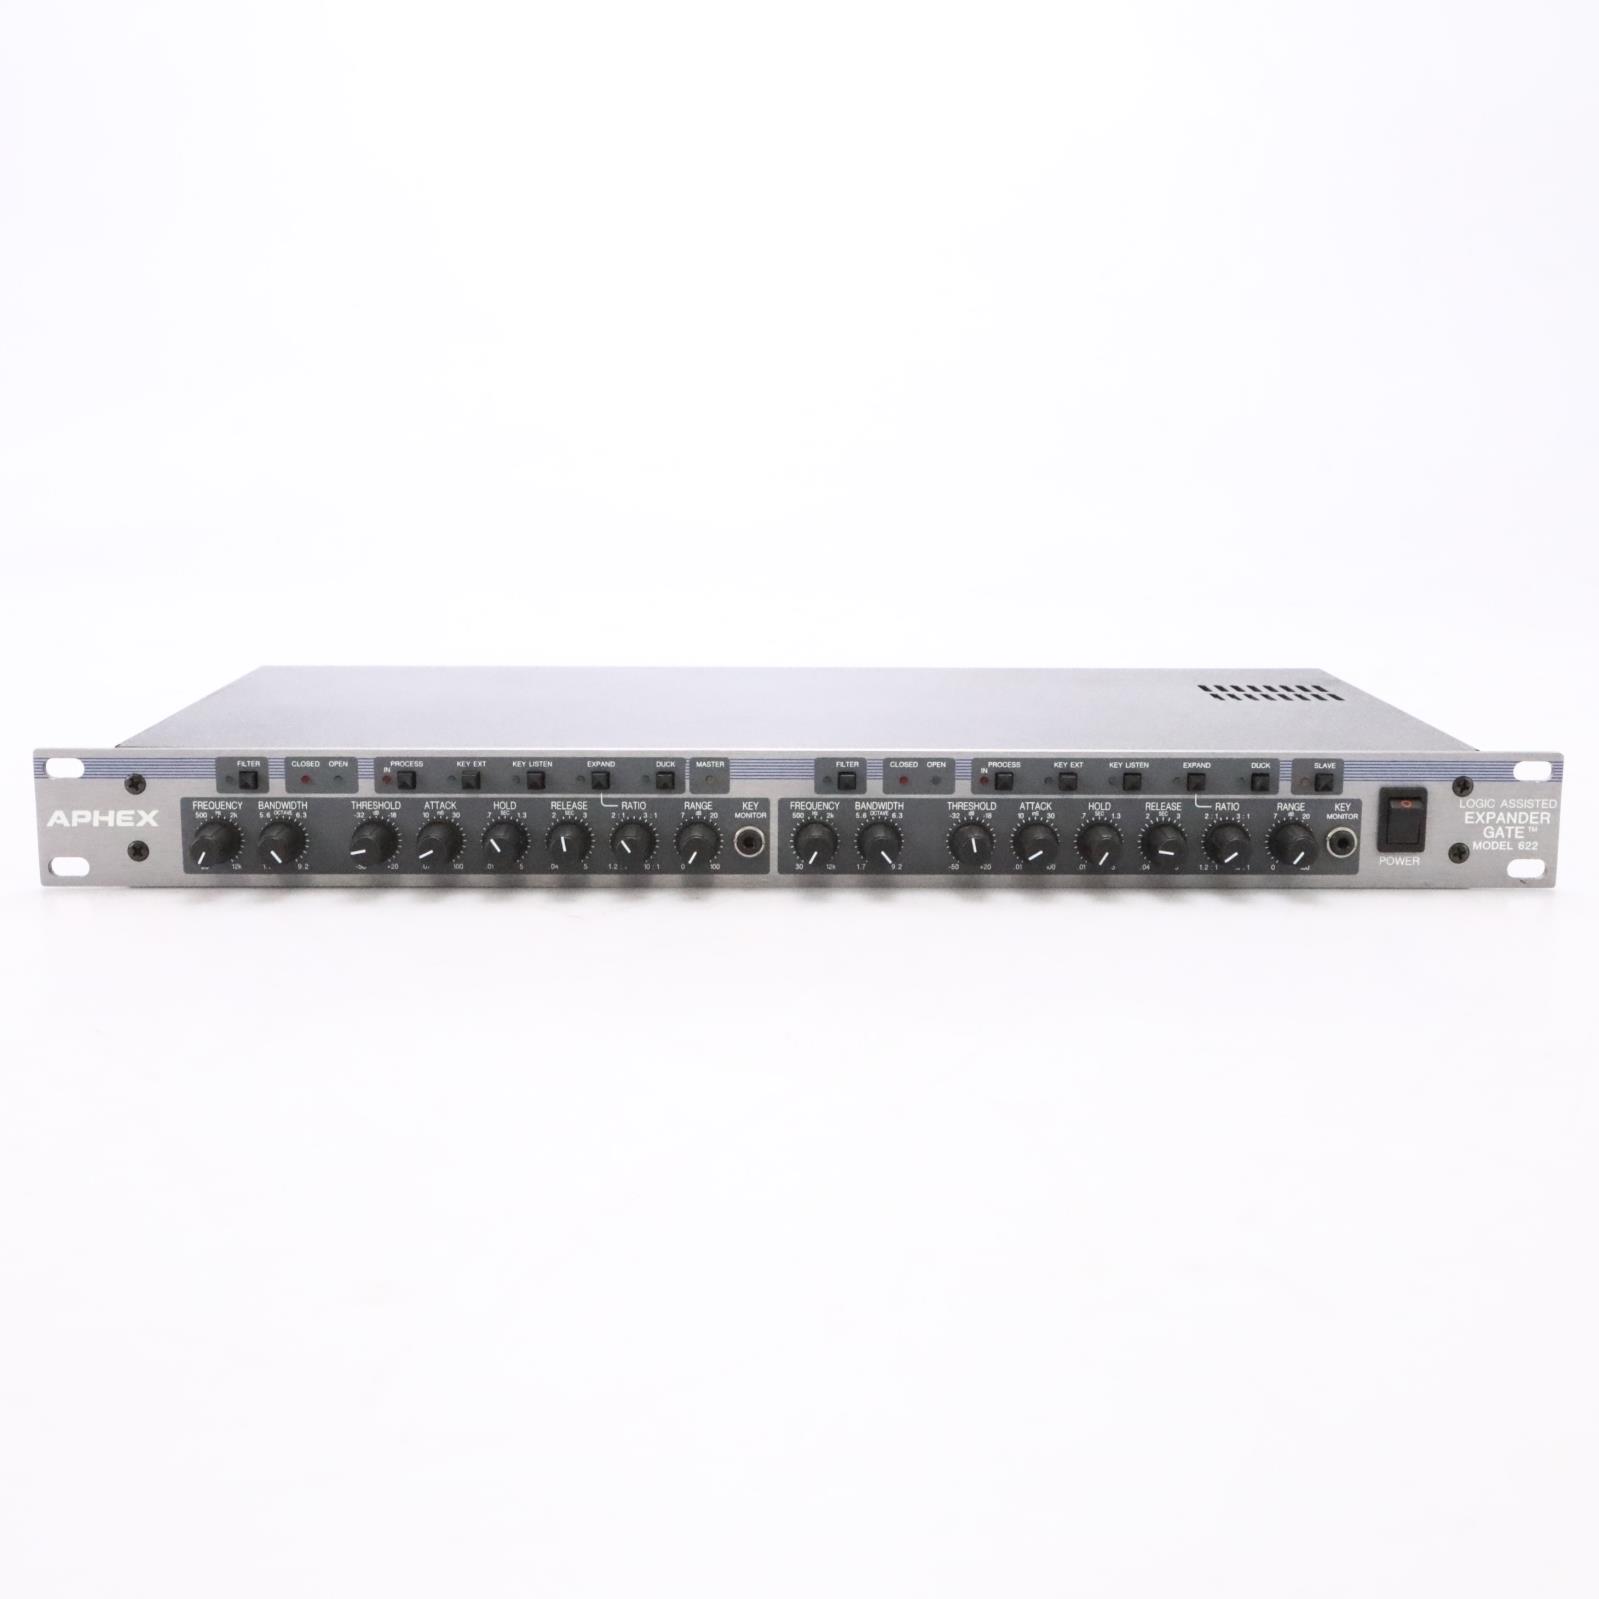 Aphex Model 622 Expander Gate Signal Processor Unit w/ XLR TS Cables #48855